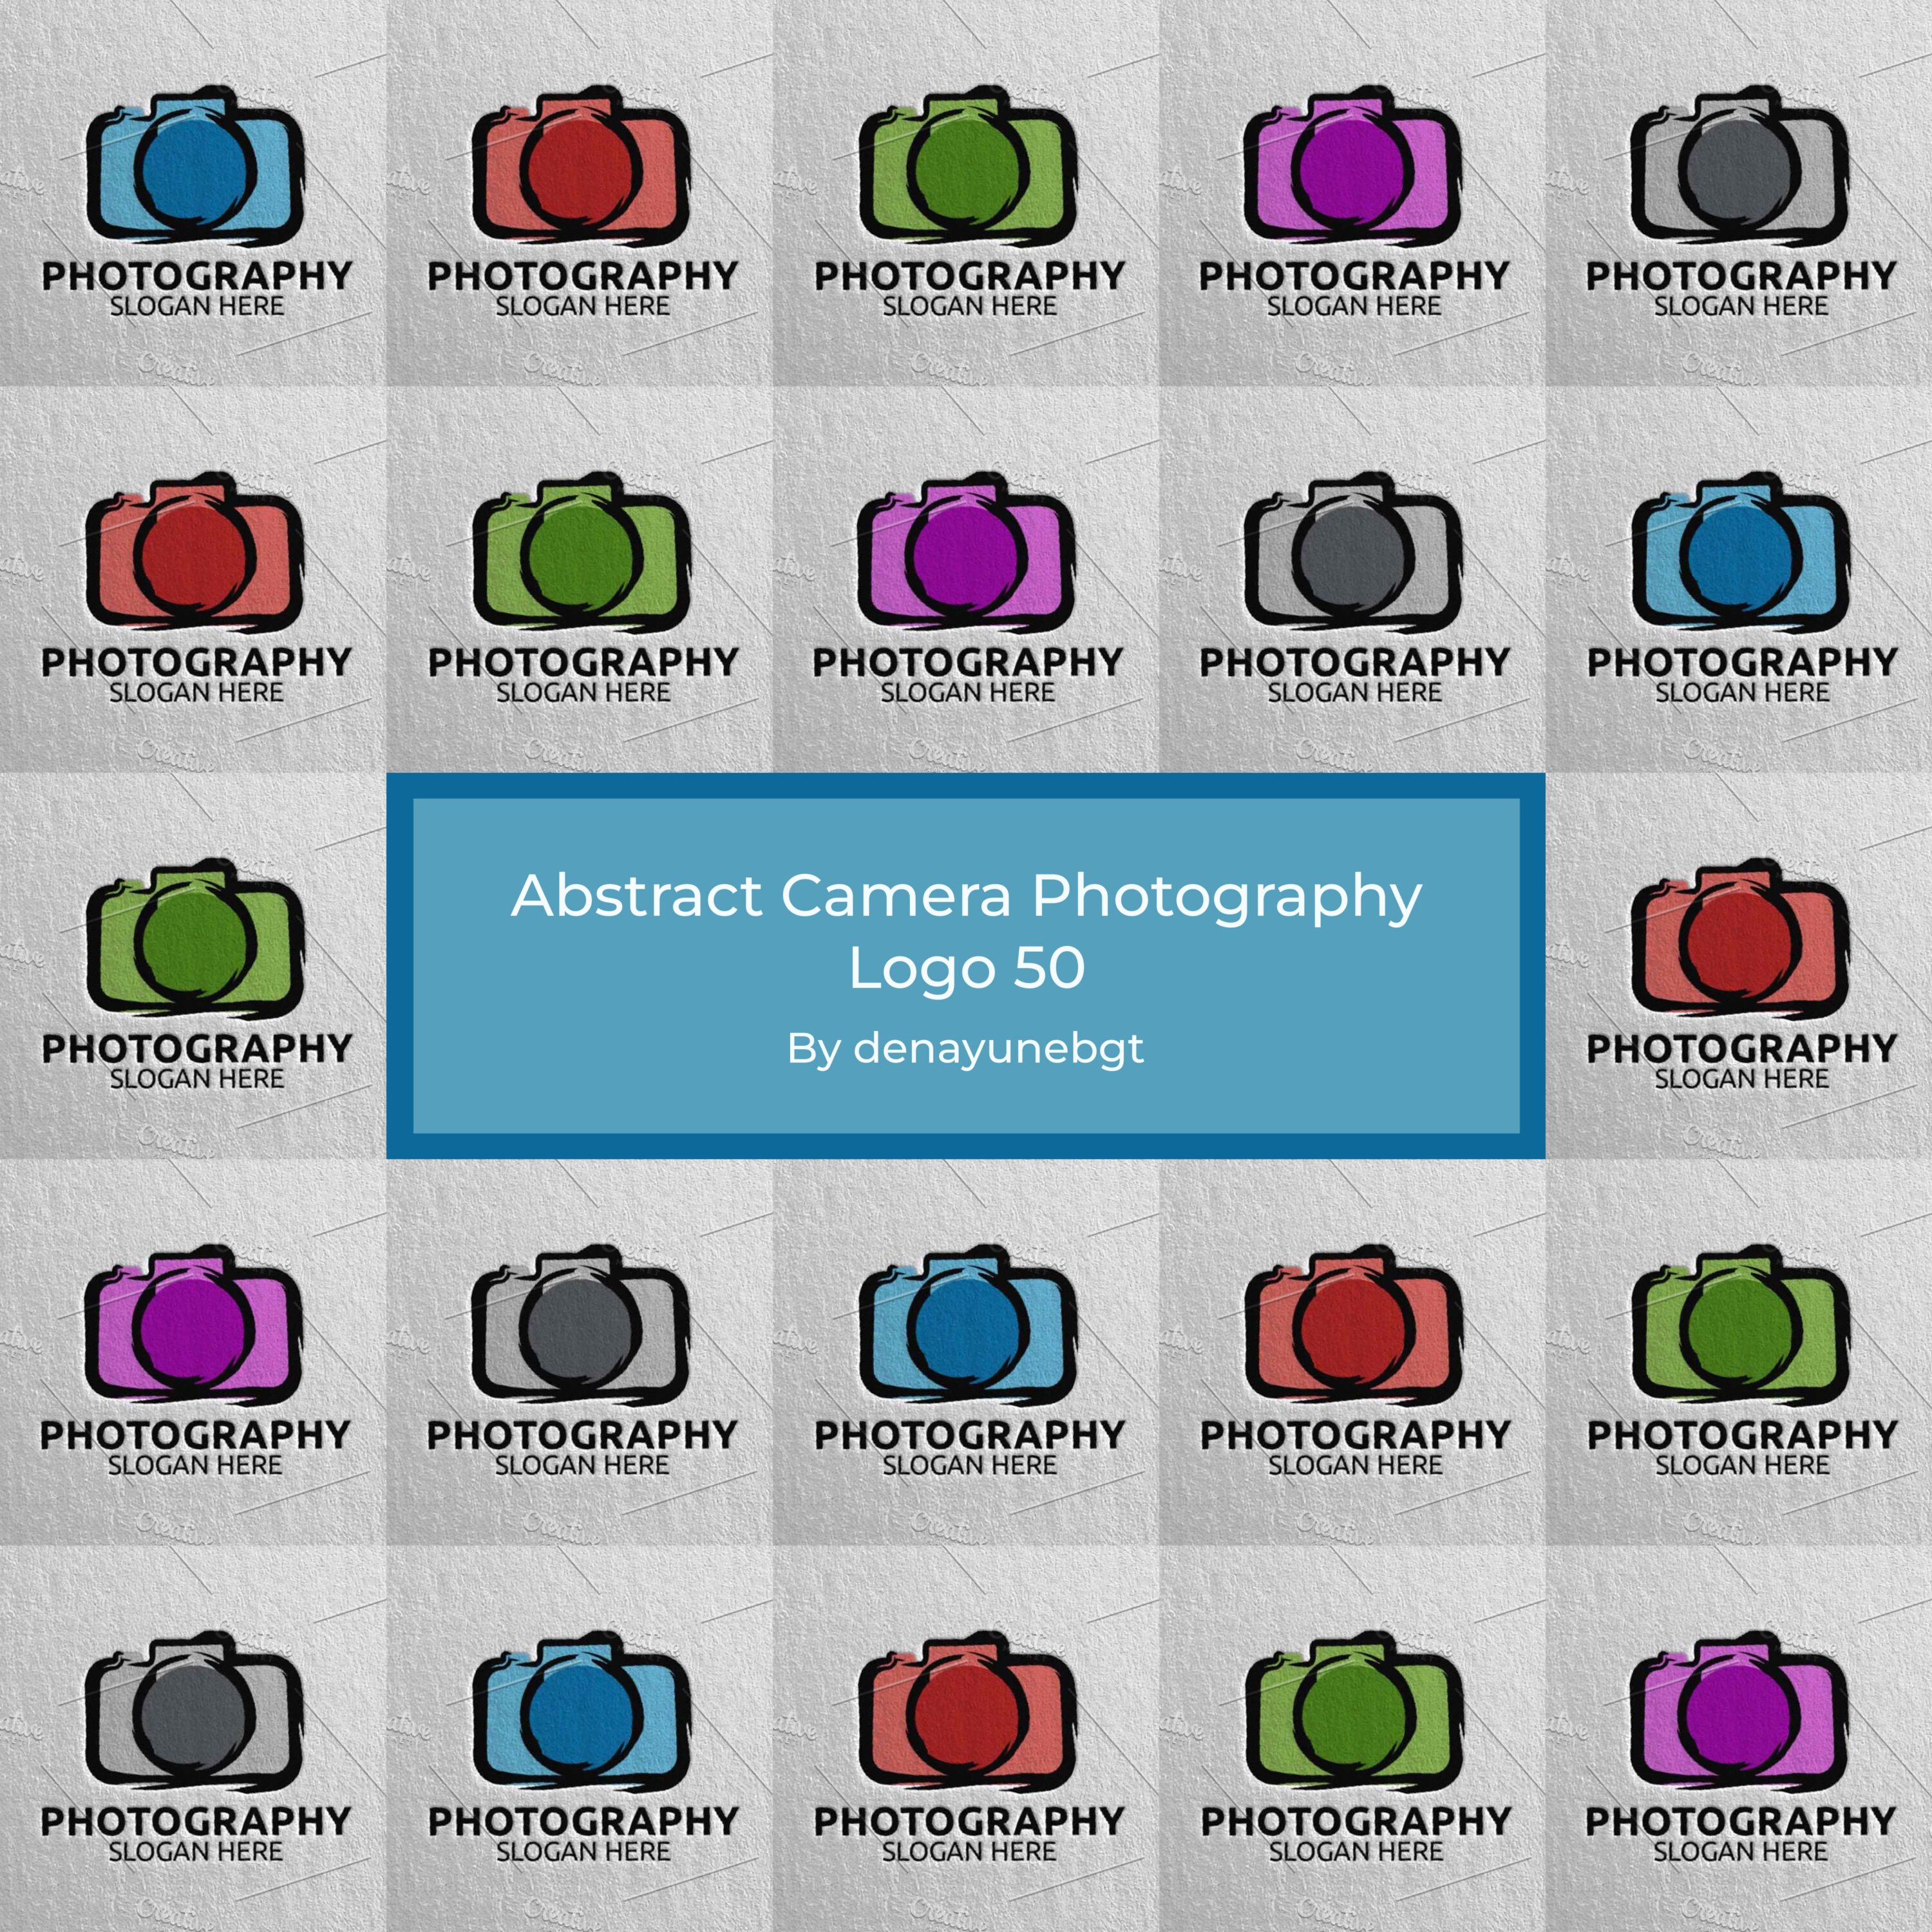 Abstract Camera Photography Logo 50.